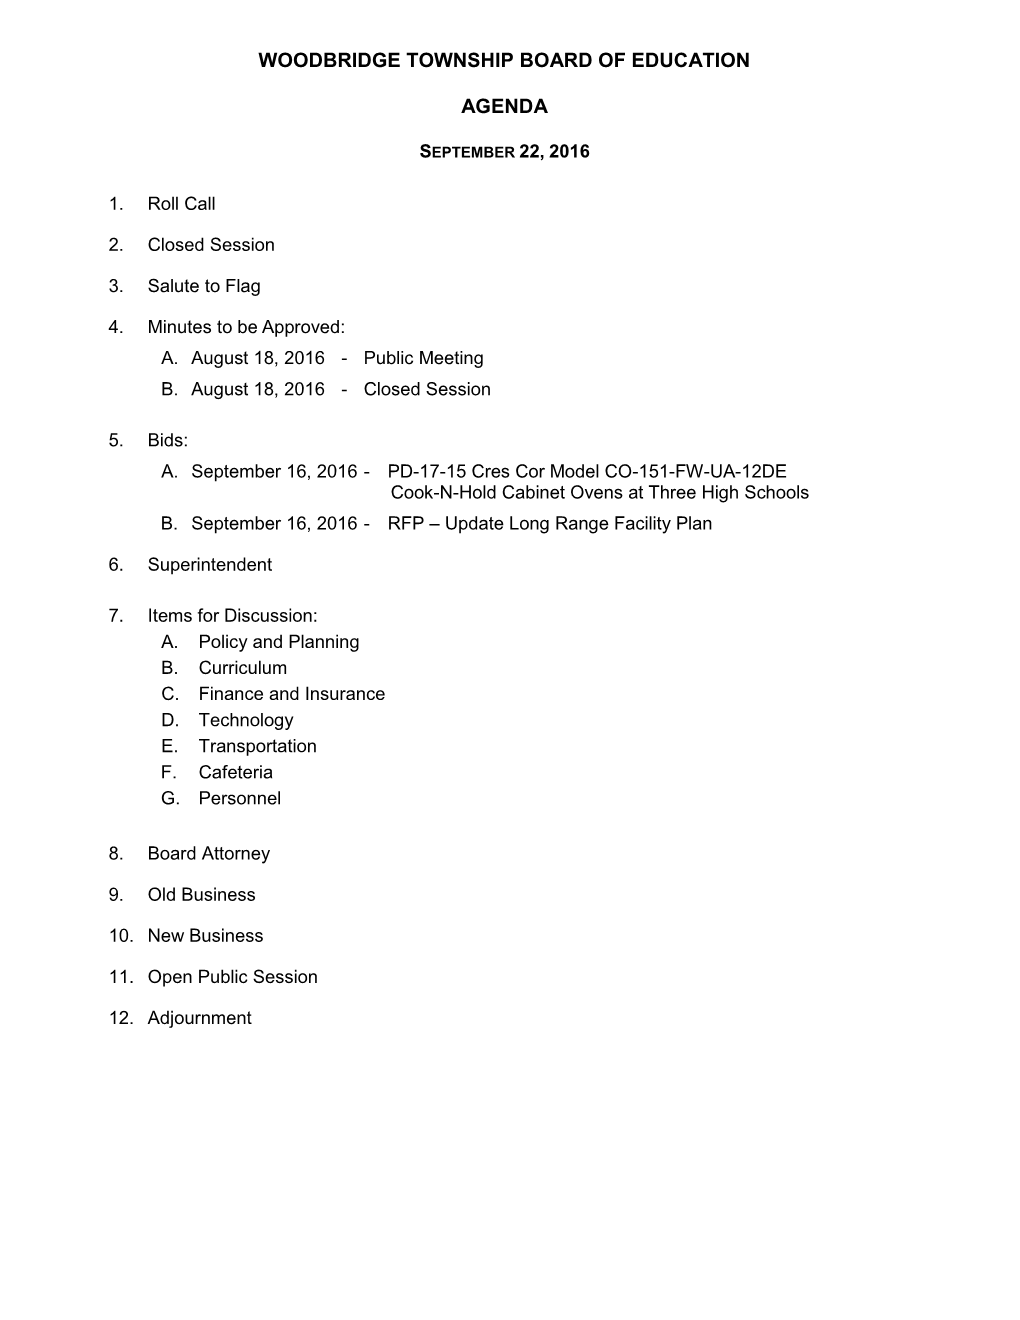 Woodbridge Township Board of Education Agenda